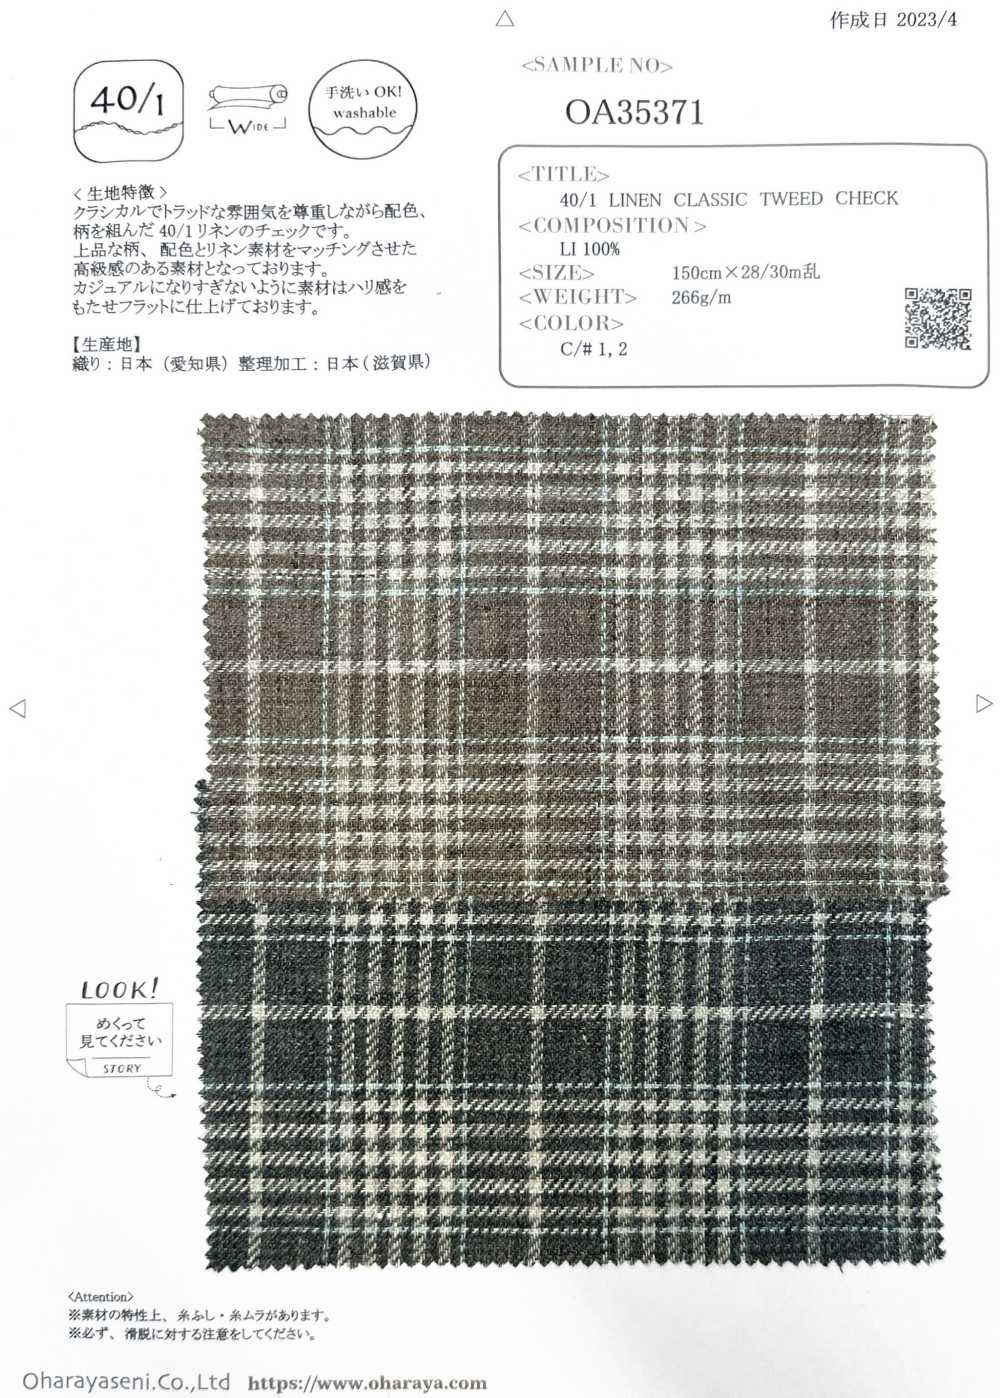 OA35371 40/1 LINO CLÁSICO TWEED CUADROS[Fabrica Textil] Oharayaseni